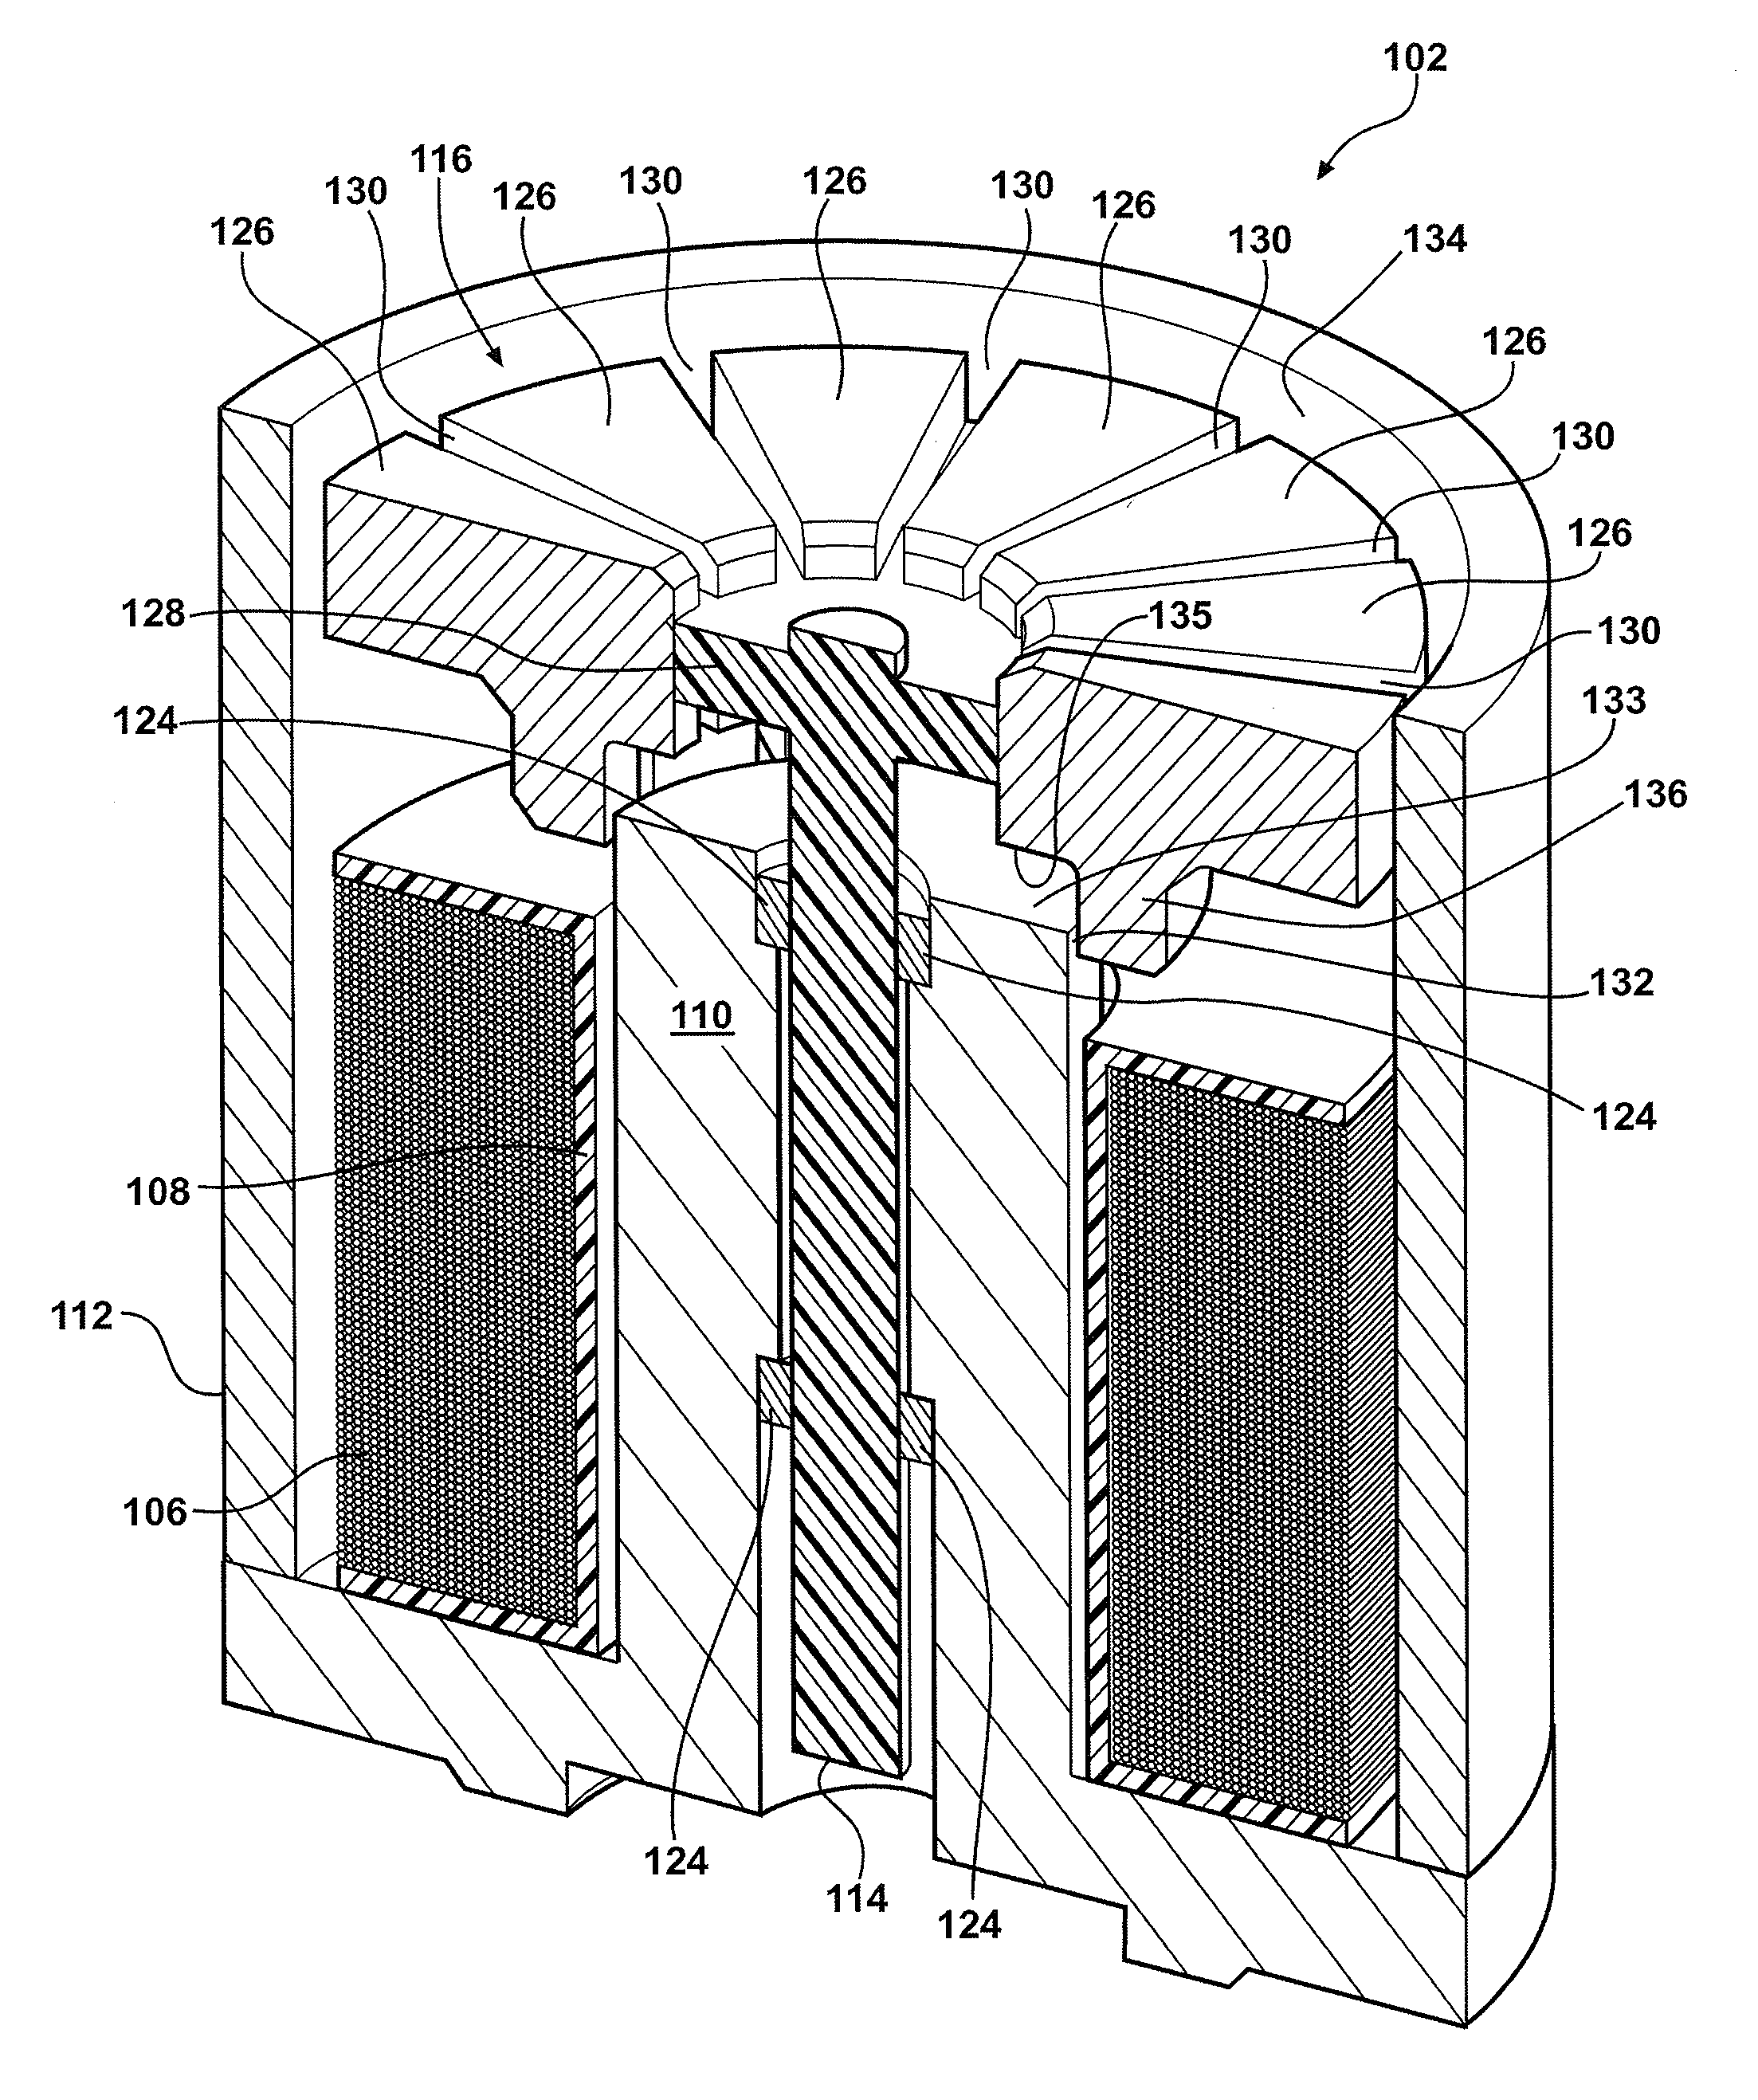 Solenoid arrangement with segmented armature member for reducing radial force